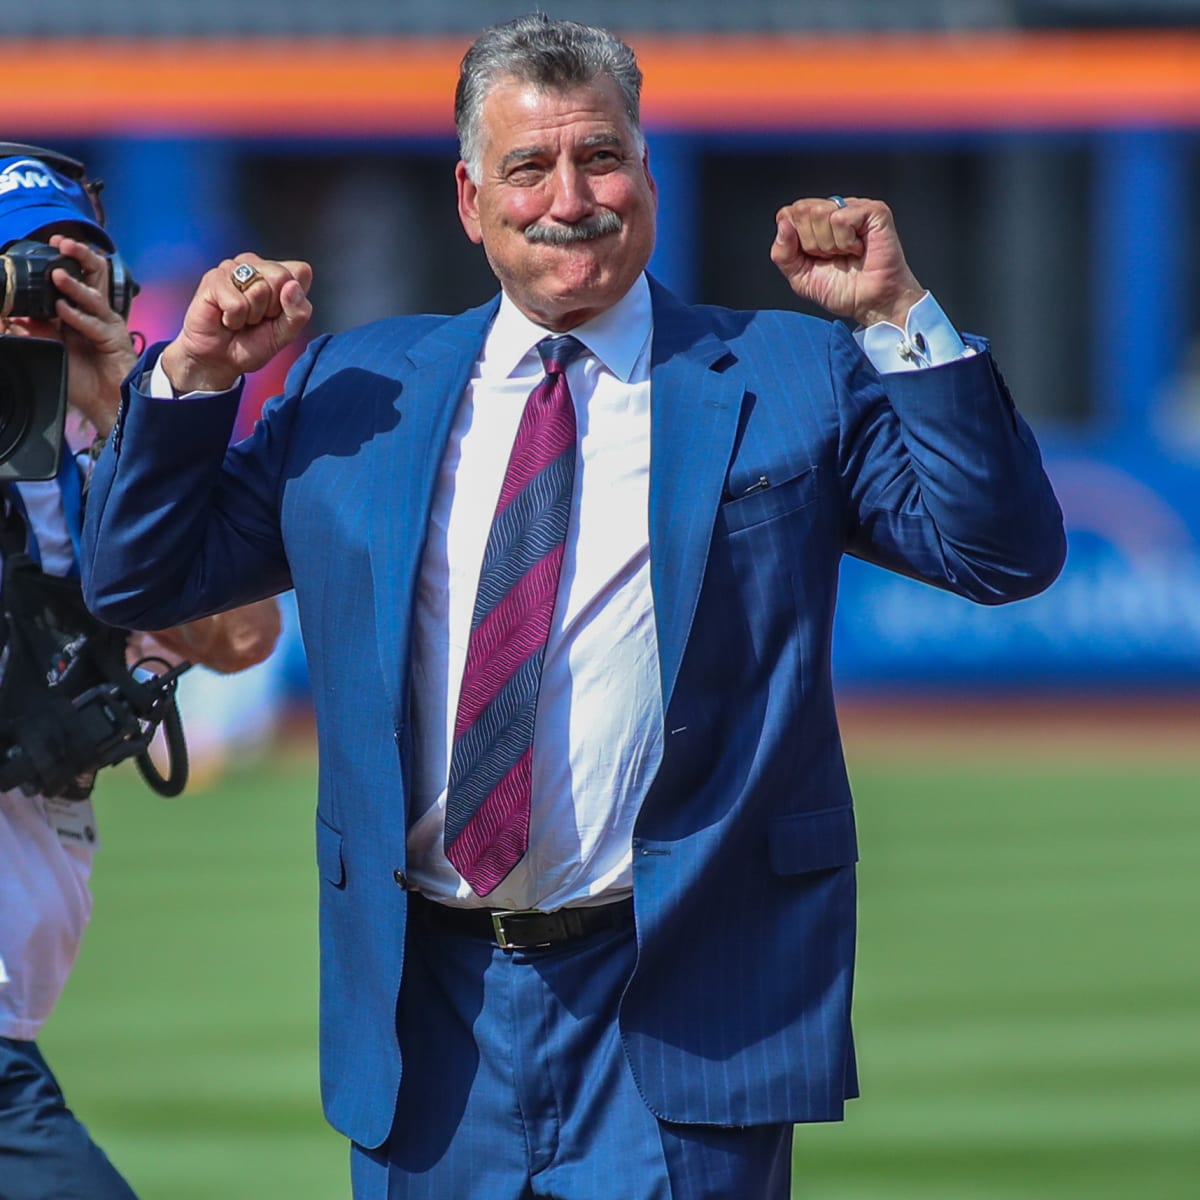 Mets retire Keith Hernandez's No. 17 - The Athletic